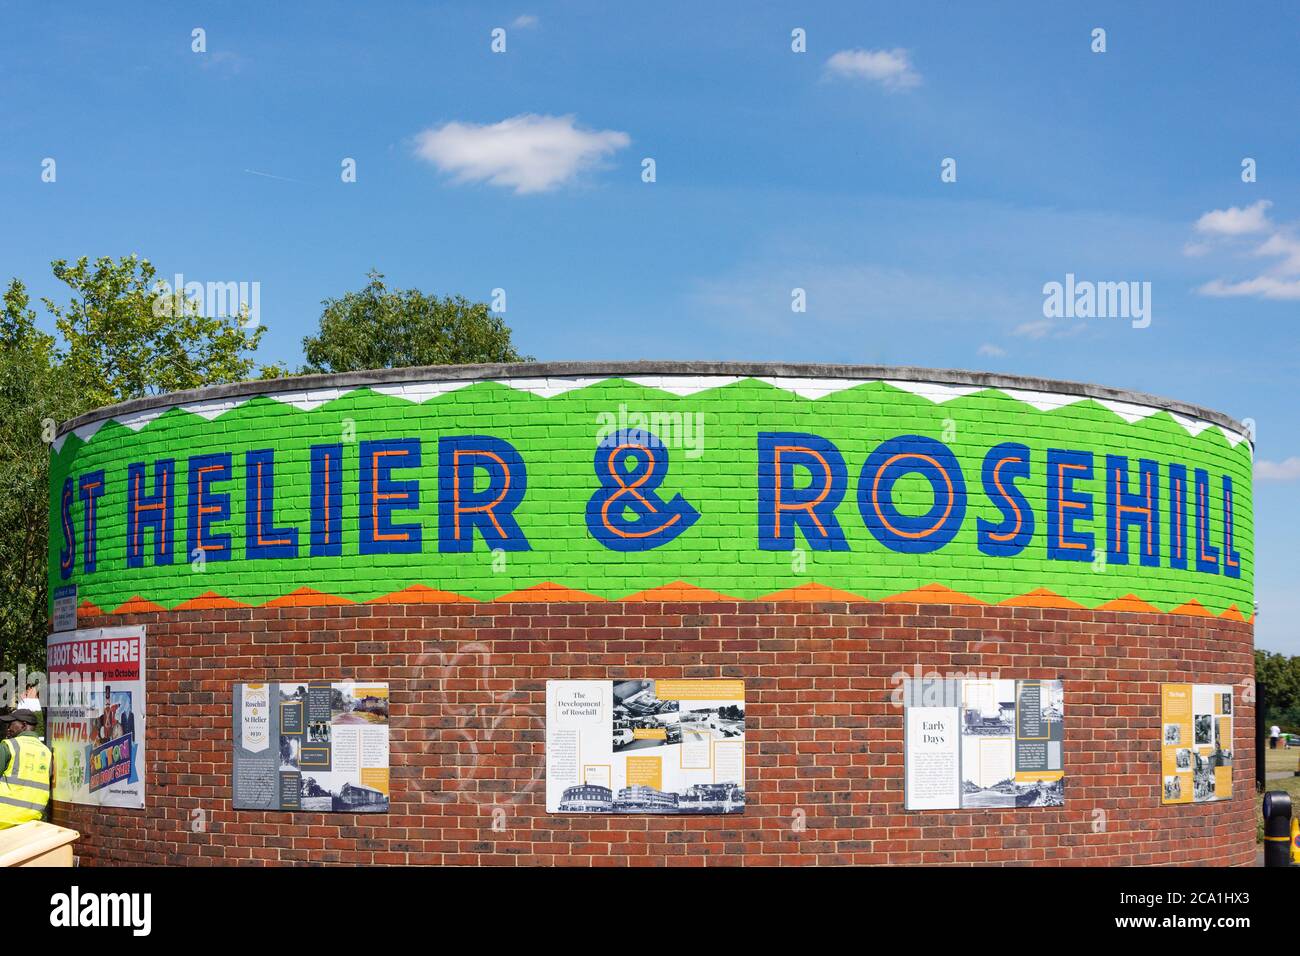 St Helier & Rosehill Schild auf Rundturm, Wrythe Lane, Rosehill, London Borough of Sutton, Greater London, England, Vereinigtes Königreich Stockfoto